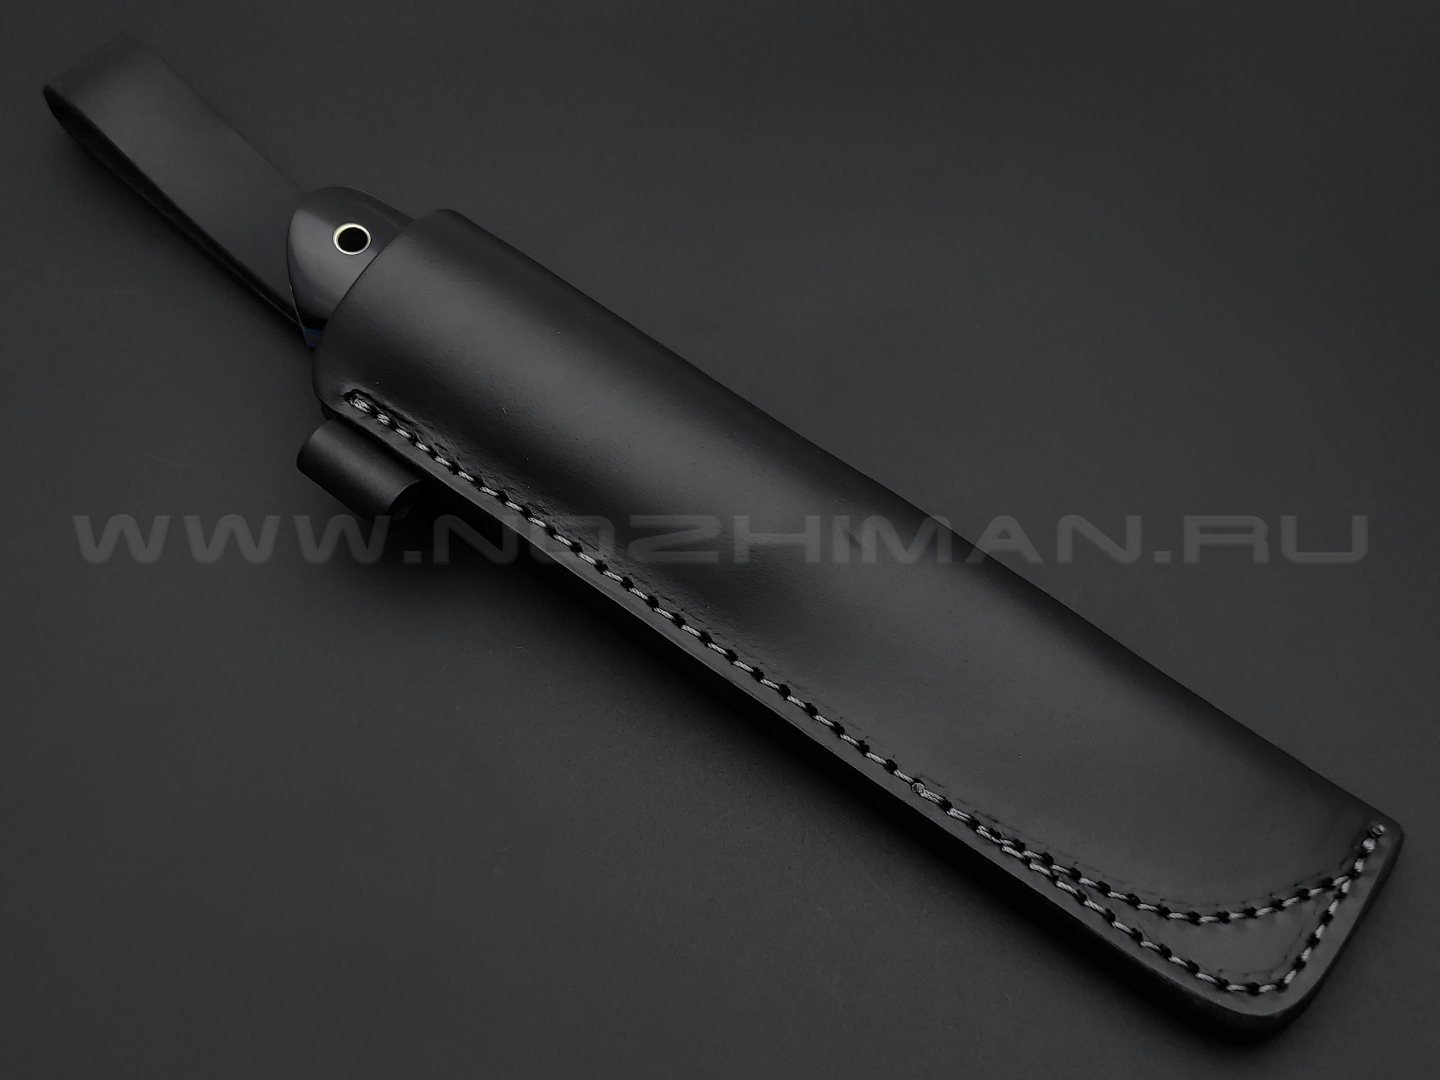 Нож Burlax BX0027 сталь N690, рукоять черная микарта